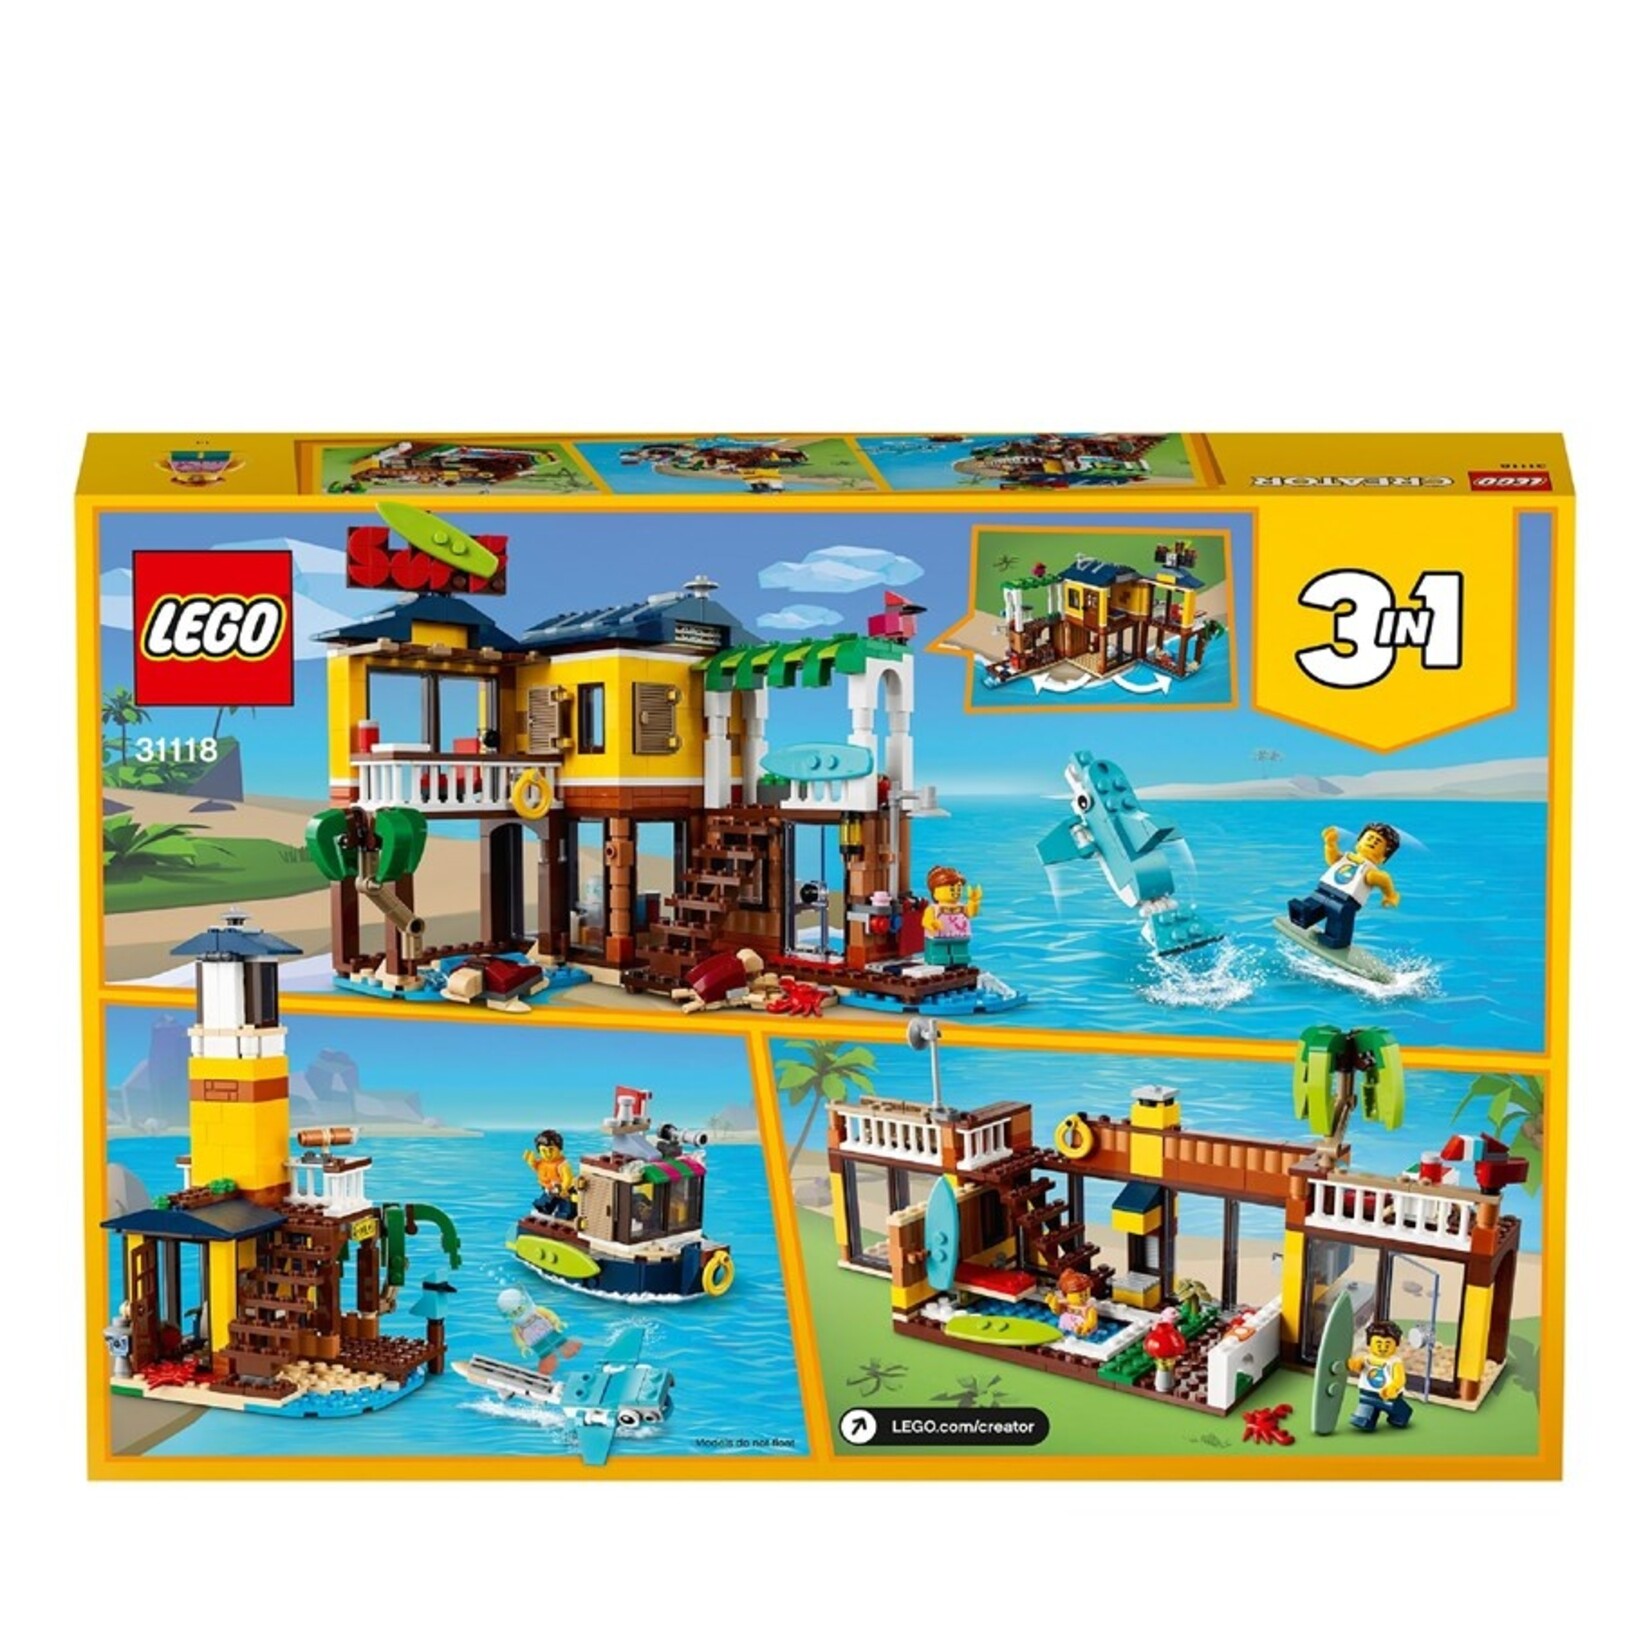 LEGO Surfer strandhuis - 31118